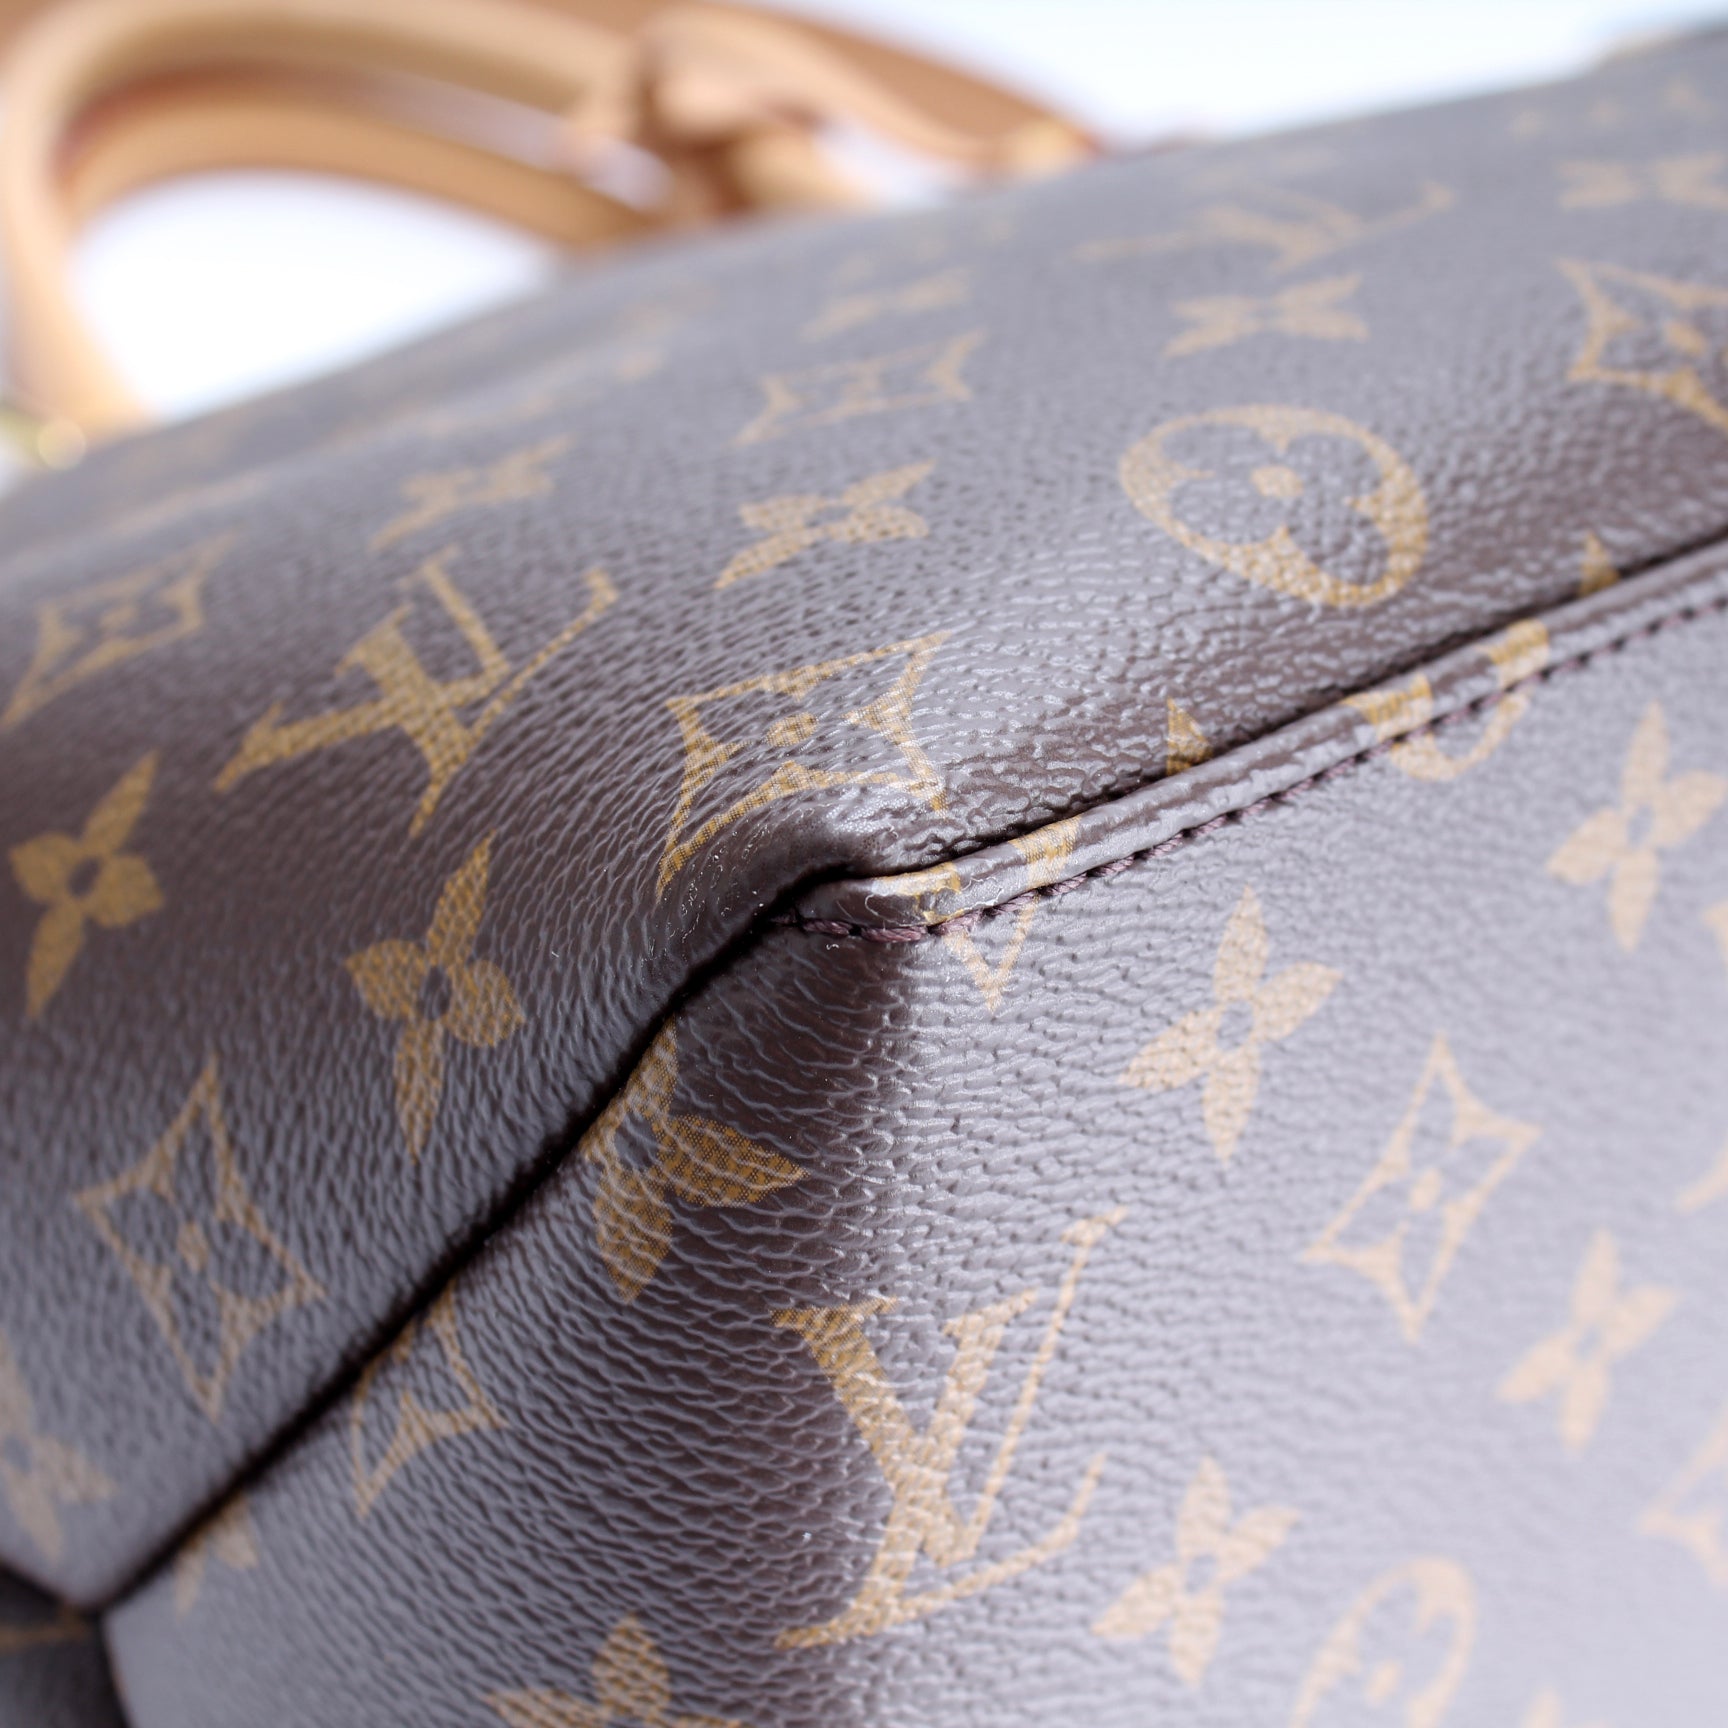 Louis Vuitton Grand Palais Bag – ZAK BAGS ©️